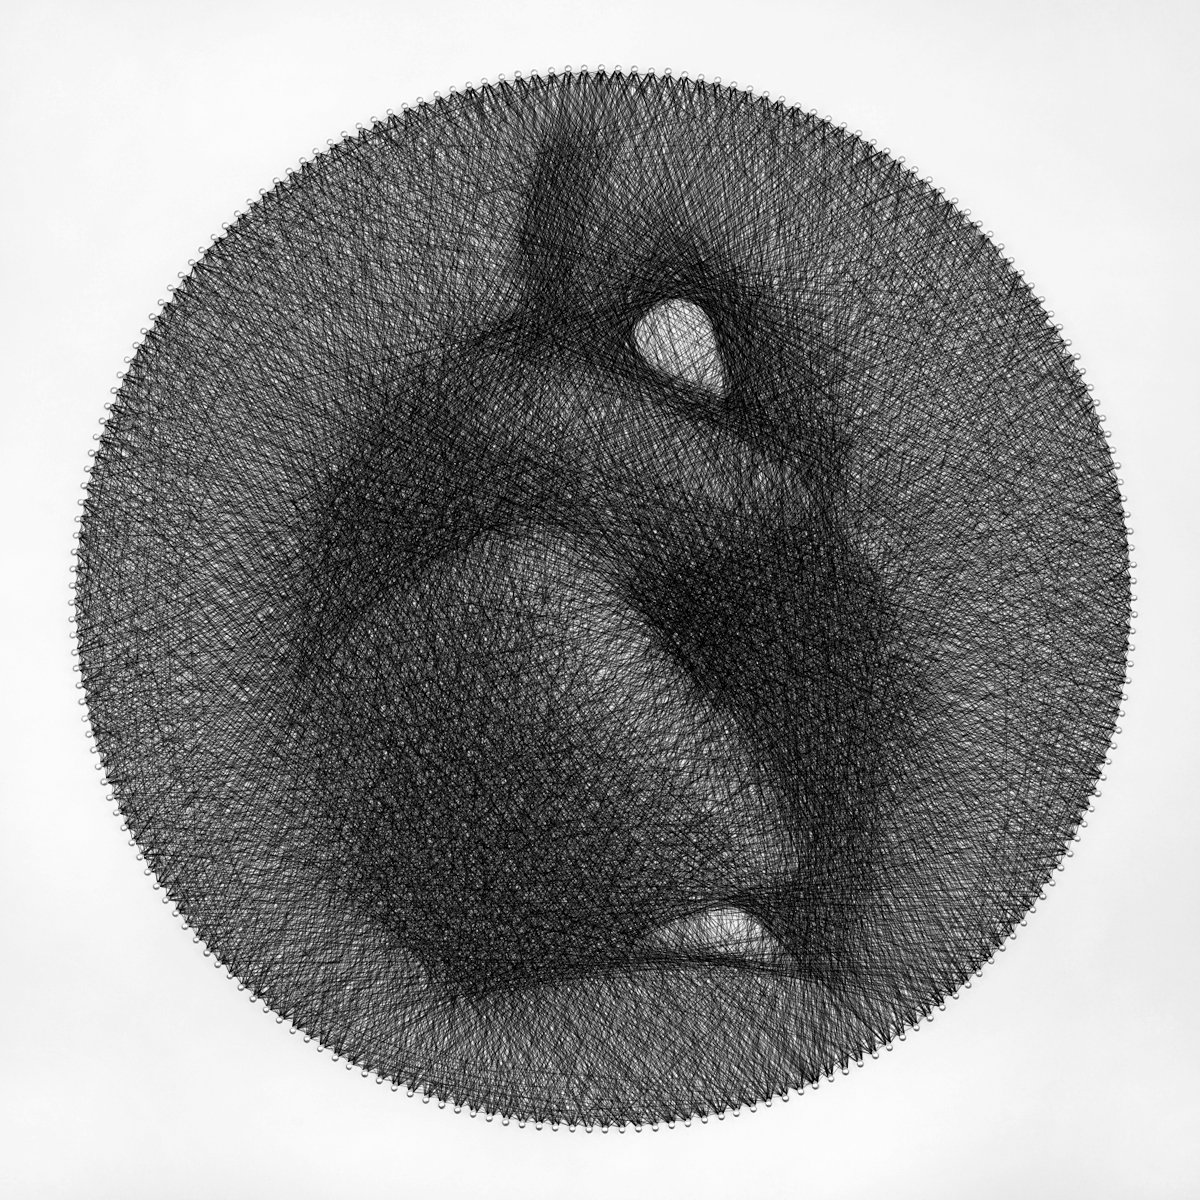 Standalone Anthropomorphic Volume String Art Sculpture by Andrey Saharov